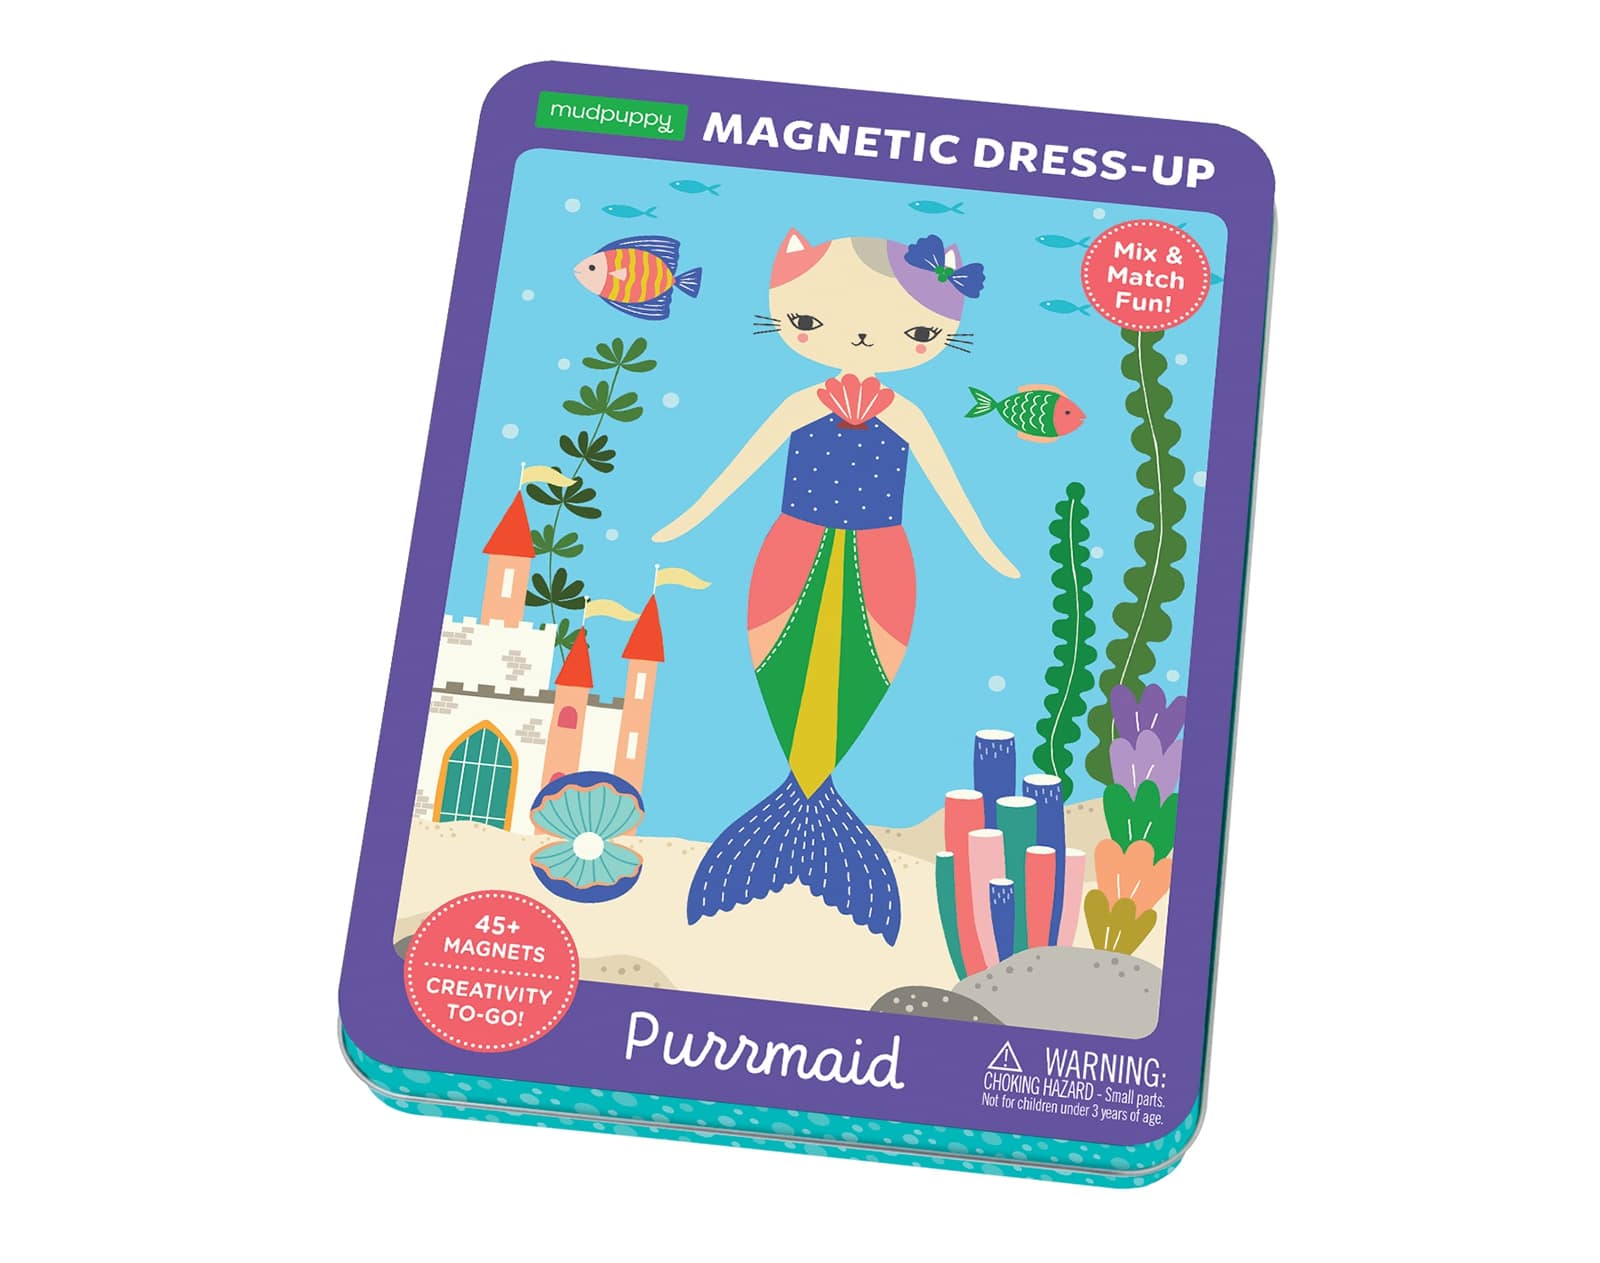 Purrmaid Magnetic Dress-up